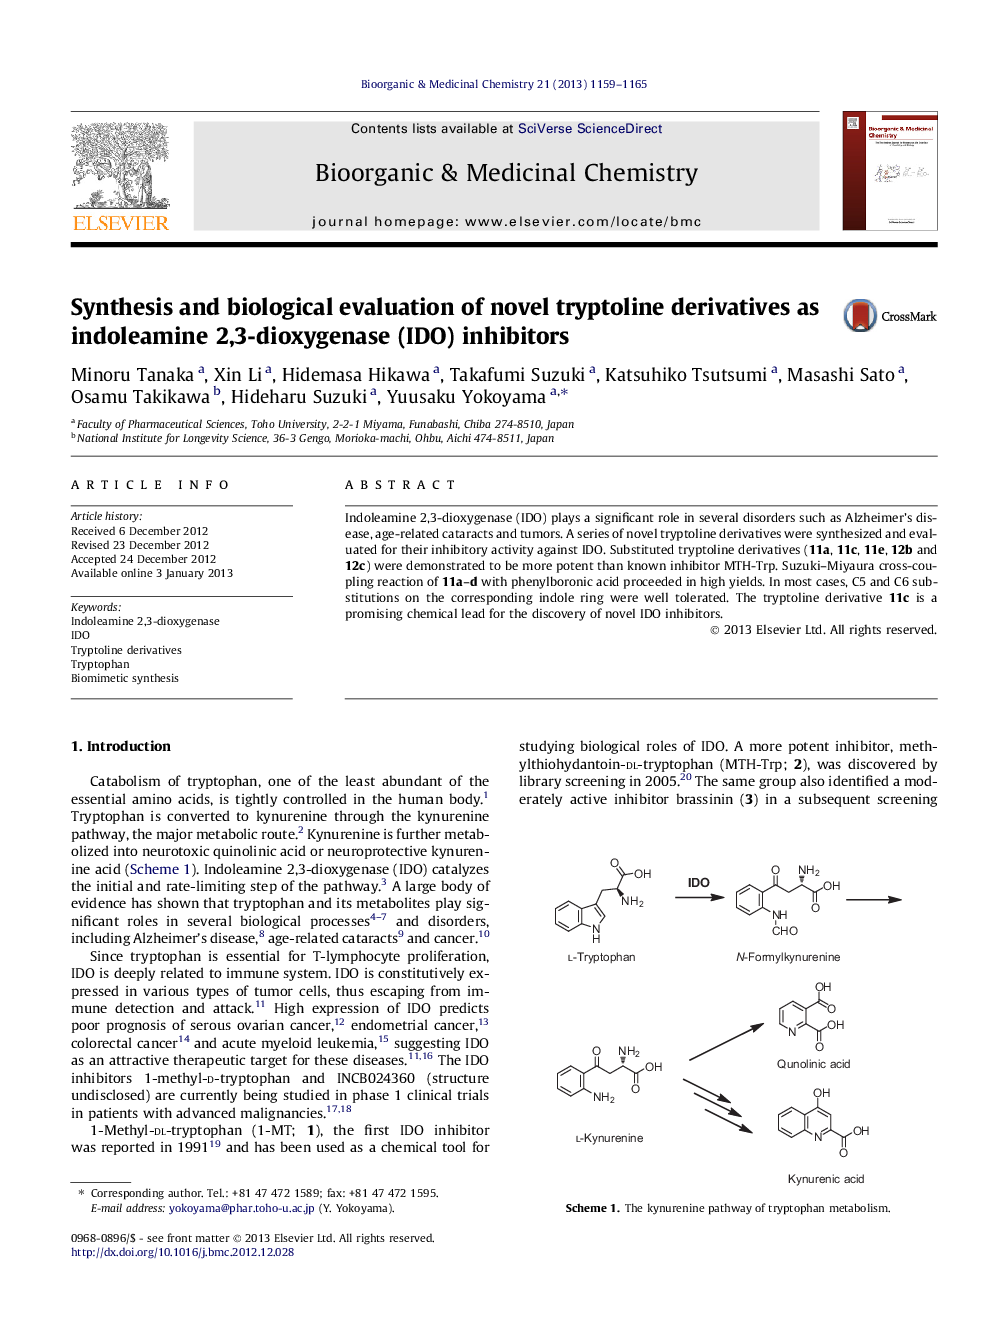 Synthesis and biological evaluation of novel tryptoline derivatives as indoleamine 2,3-dioxygenase (IDO) inhibitors